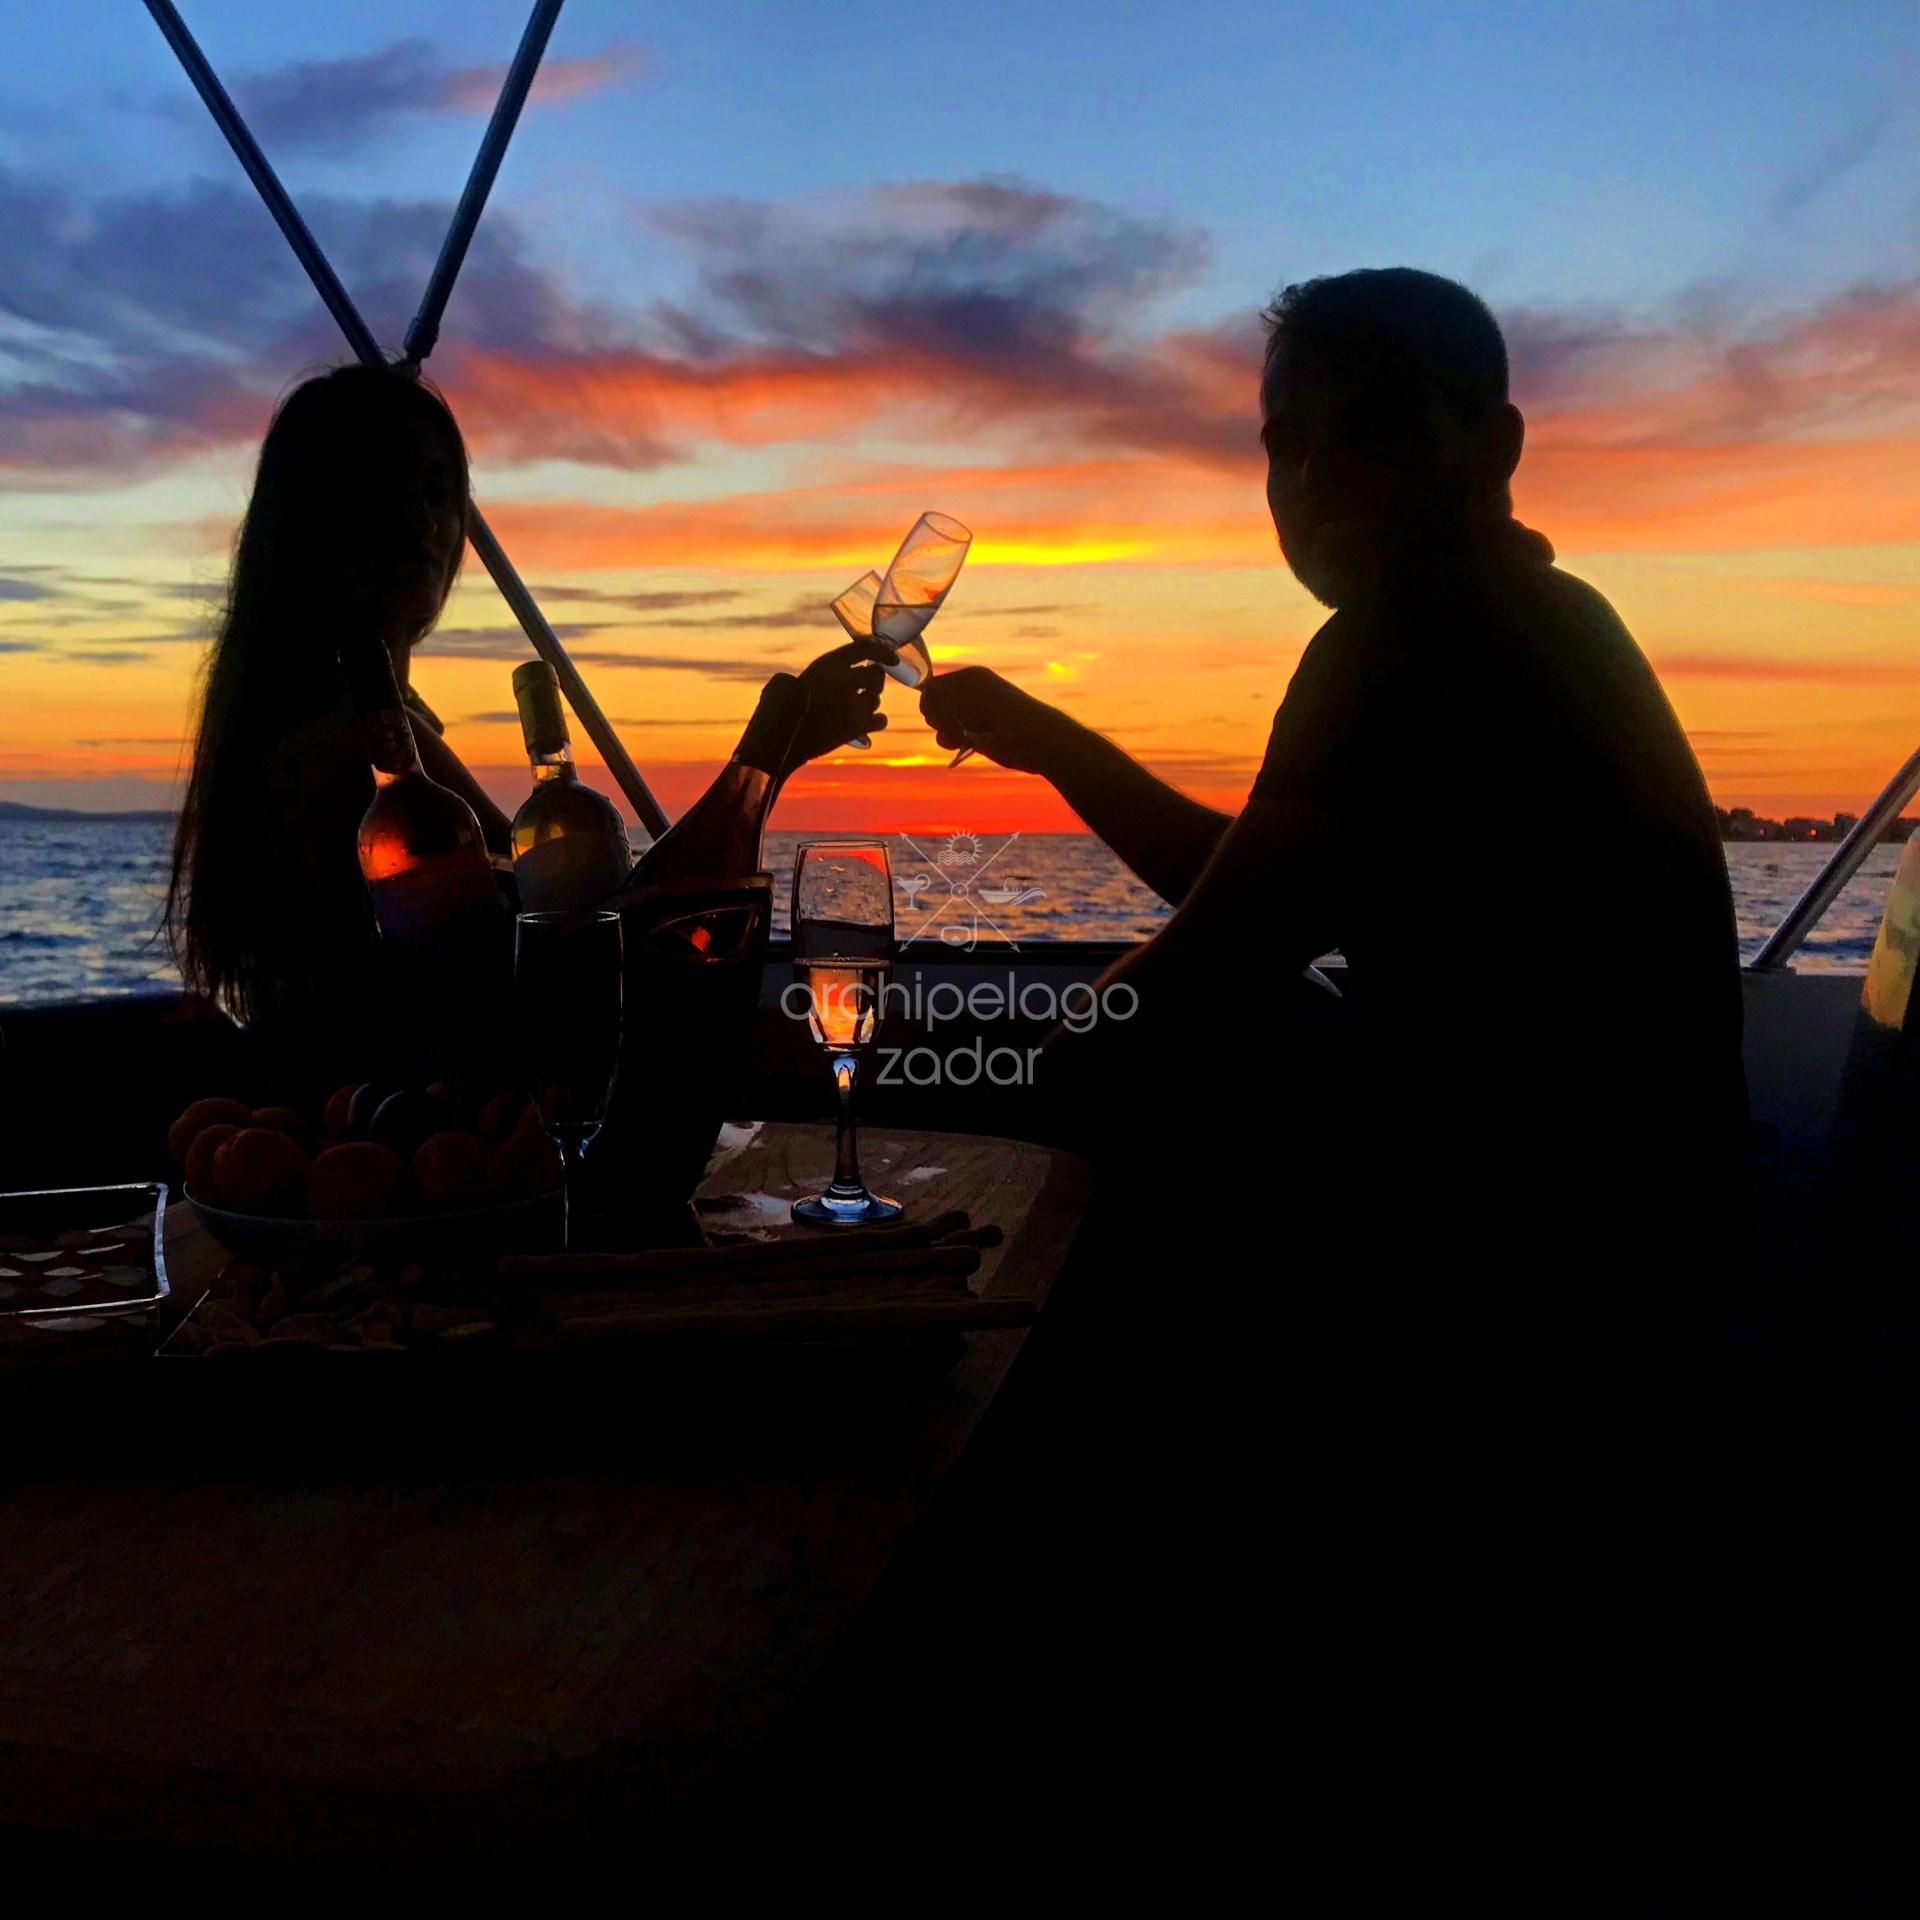 romantic proposal sunset boat trip zadar